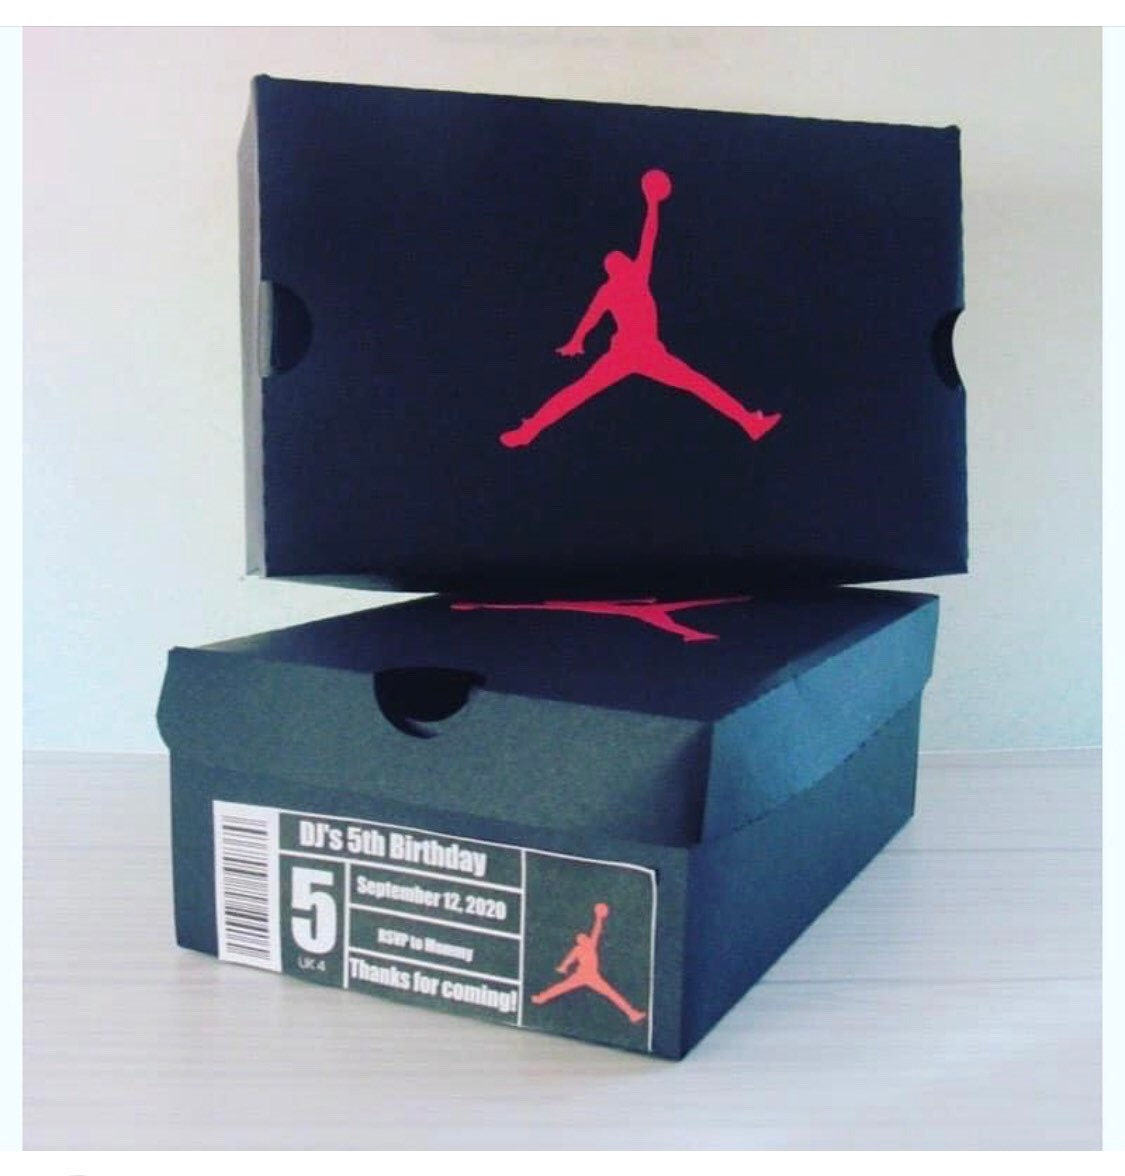 Jordan/ Nike Boxes - Etsy